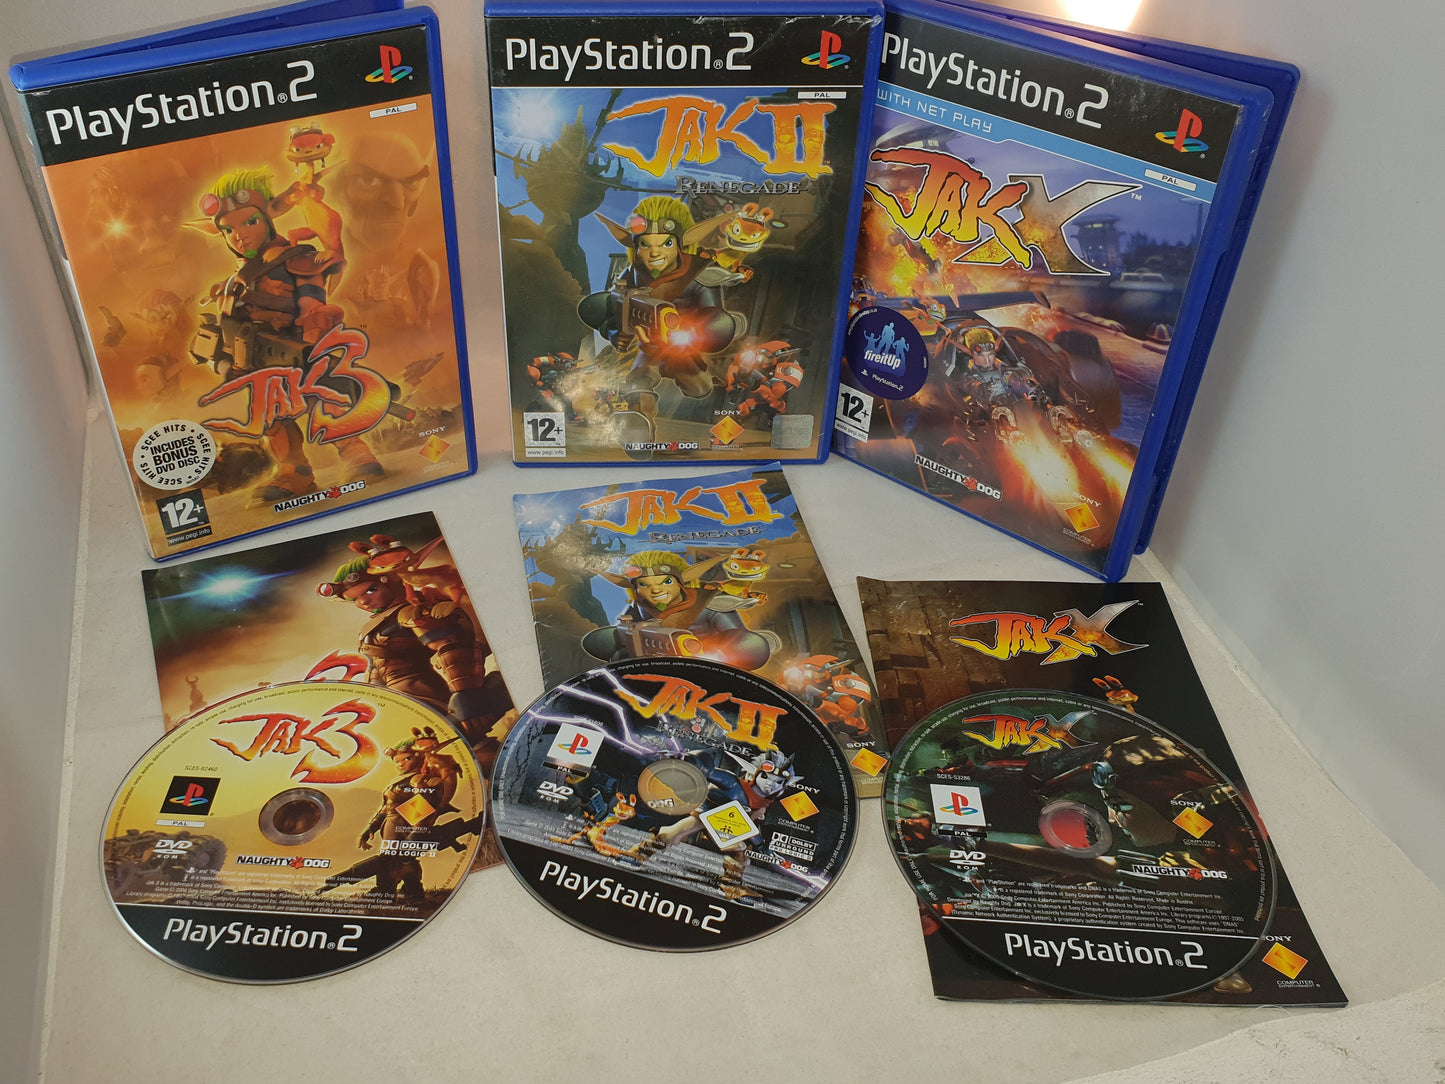 Jak x3 Sony Playstation 2 (PS2) Game Bundle